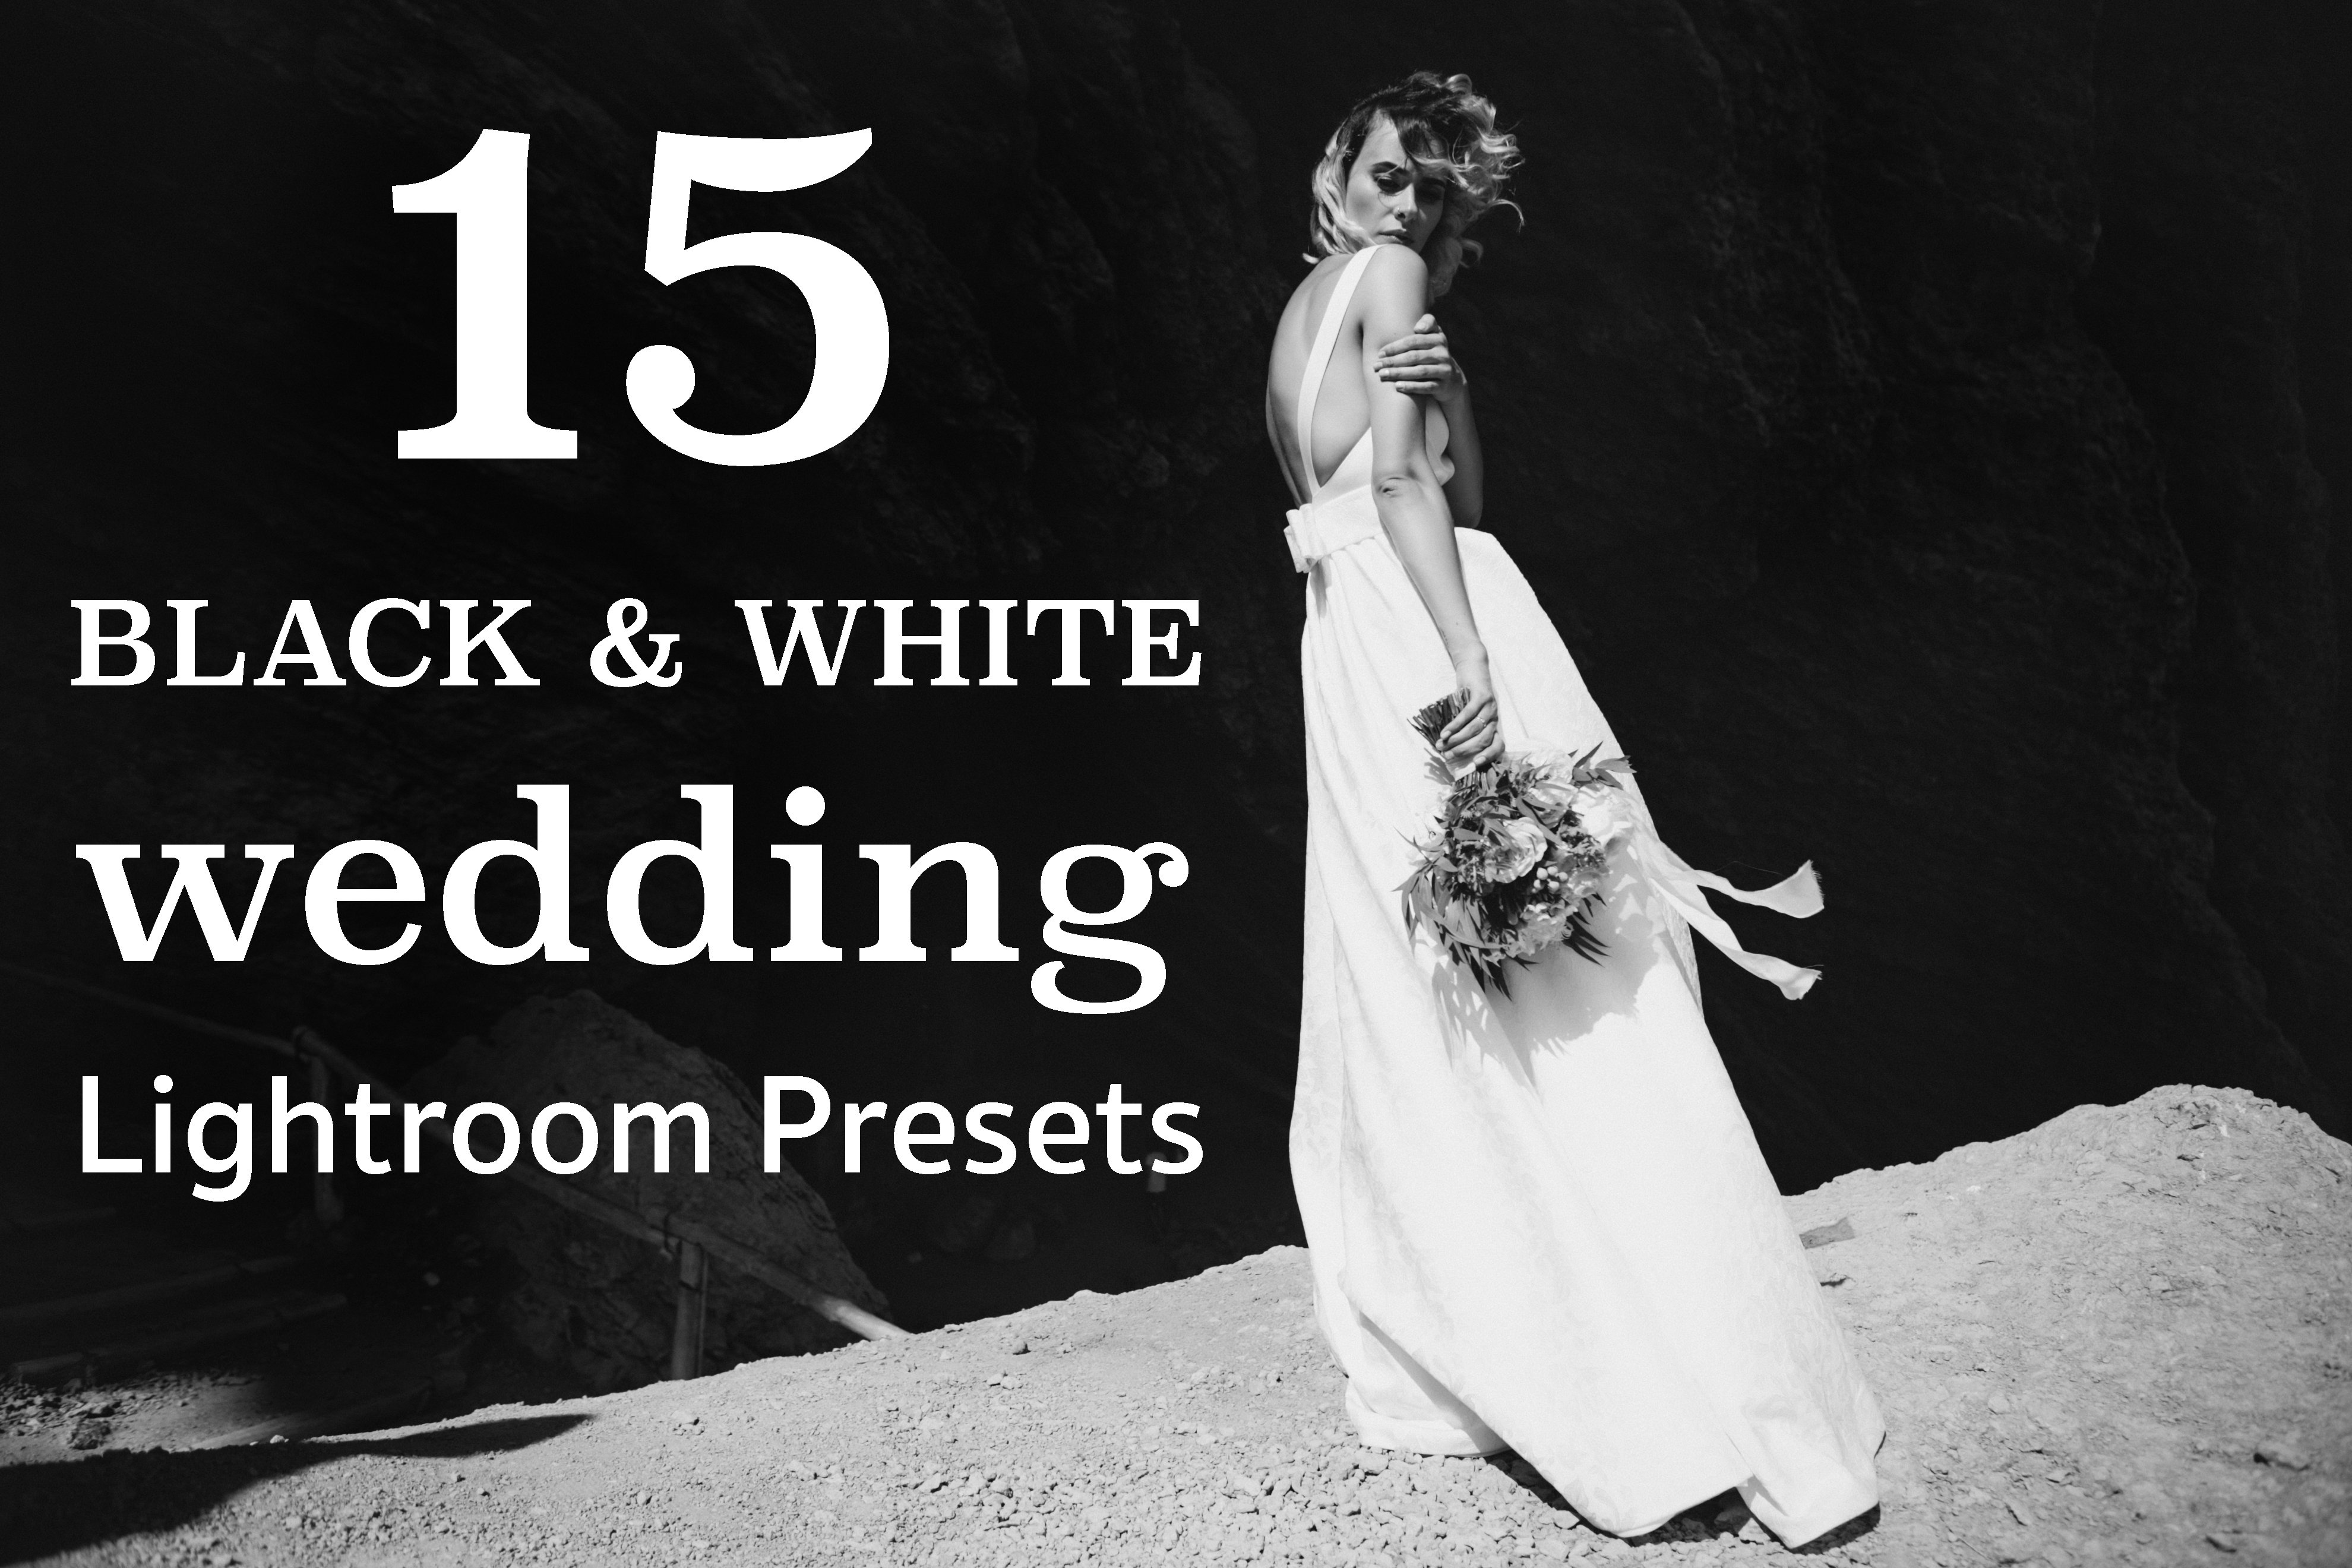 TOP 15 BW WEDDING Lightroom Presetscover image.